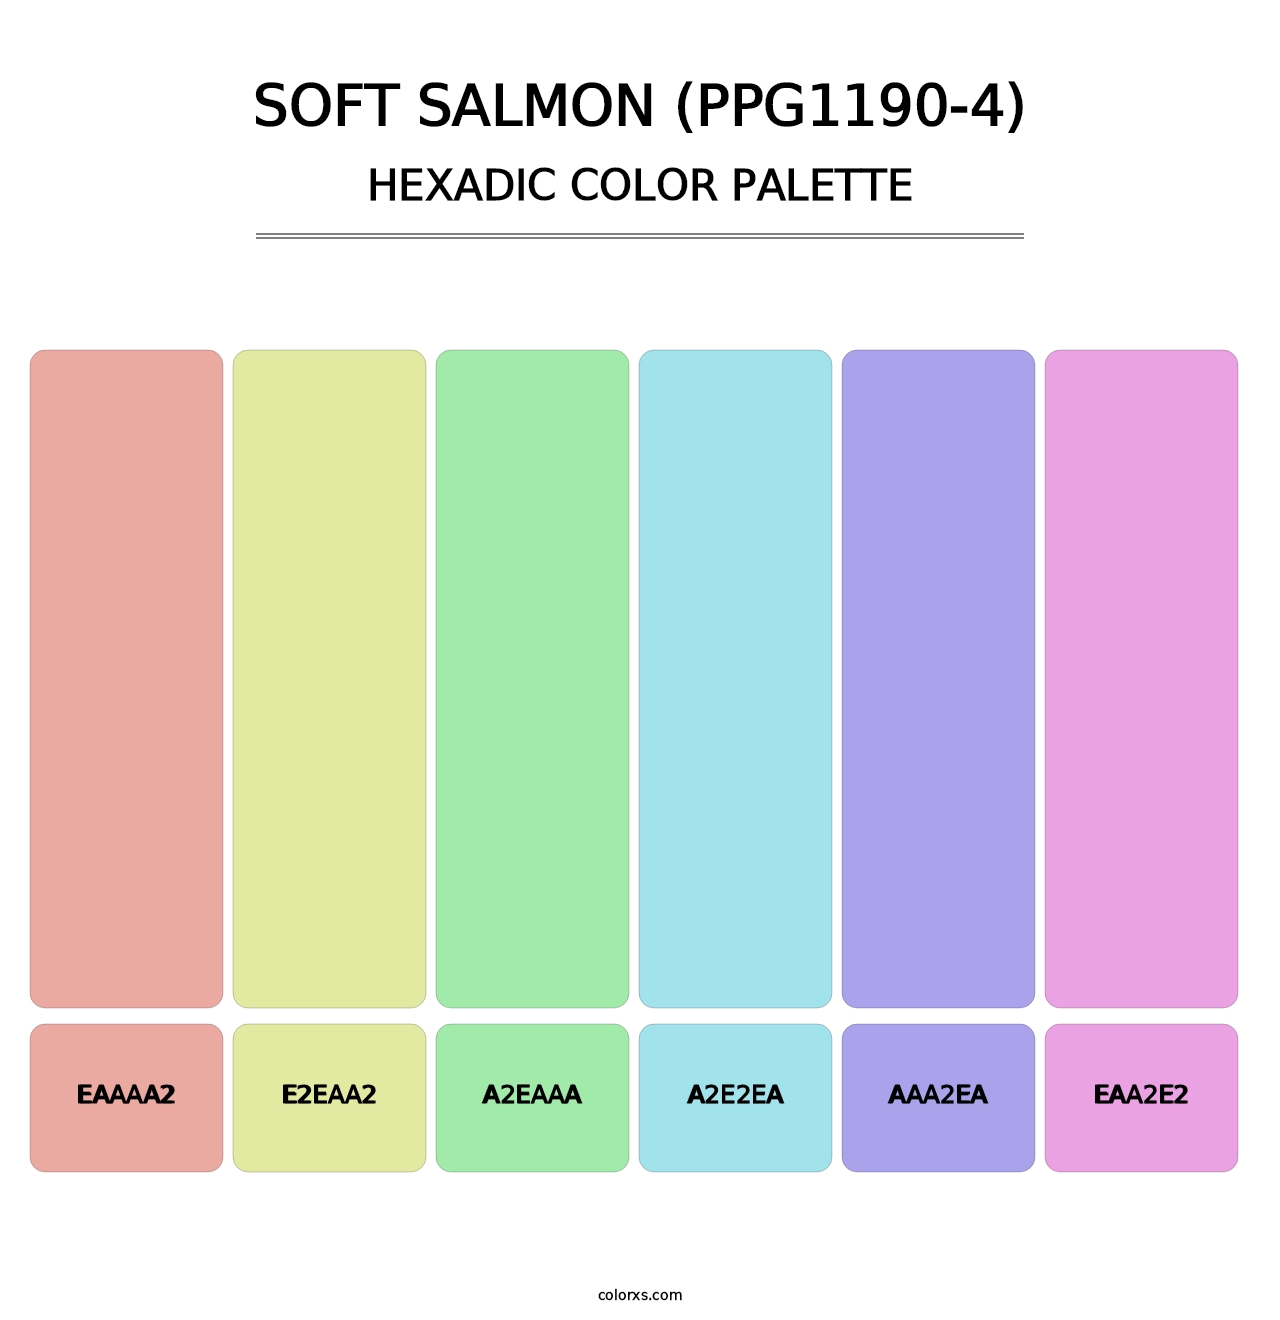 Soft Salmon (PPG1190-4) - Hexadic Color Palette